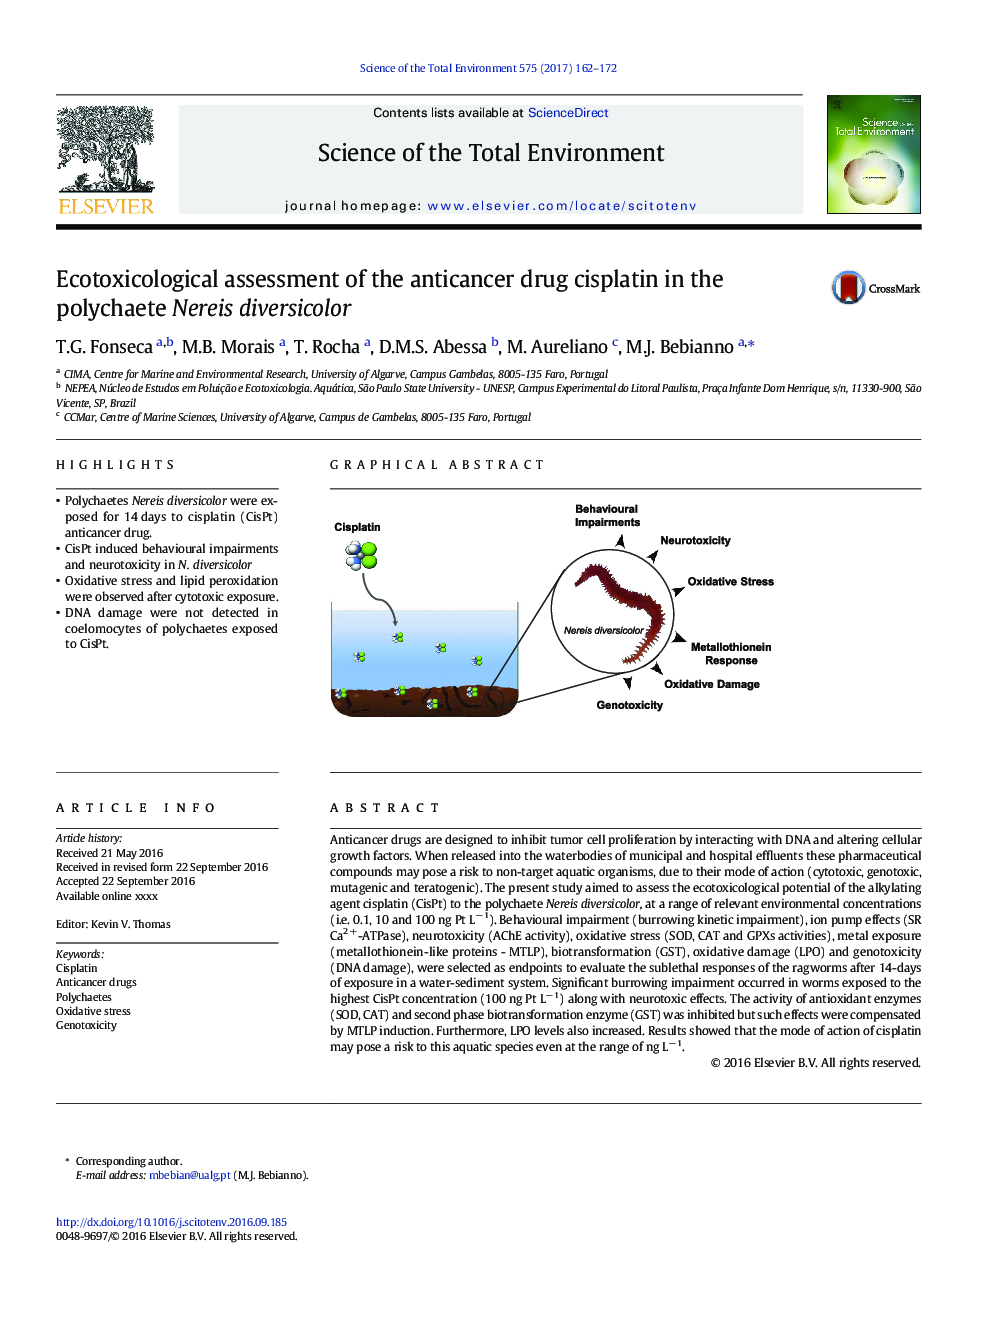 Ecotoxicological assessment of the anticancer drug cisplatin in the polychaete Nereis diversicolor